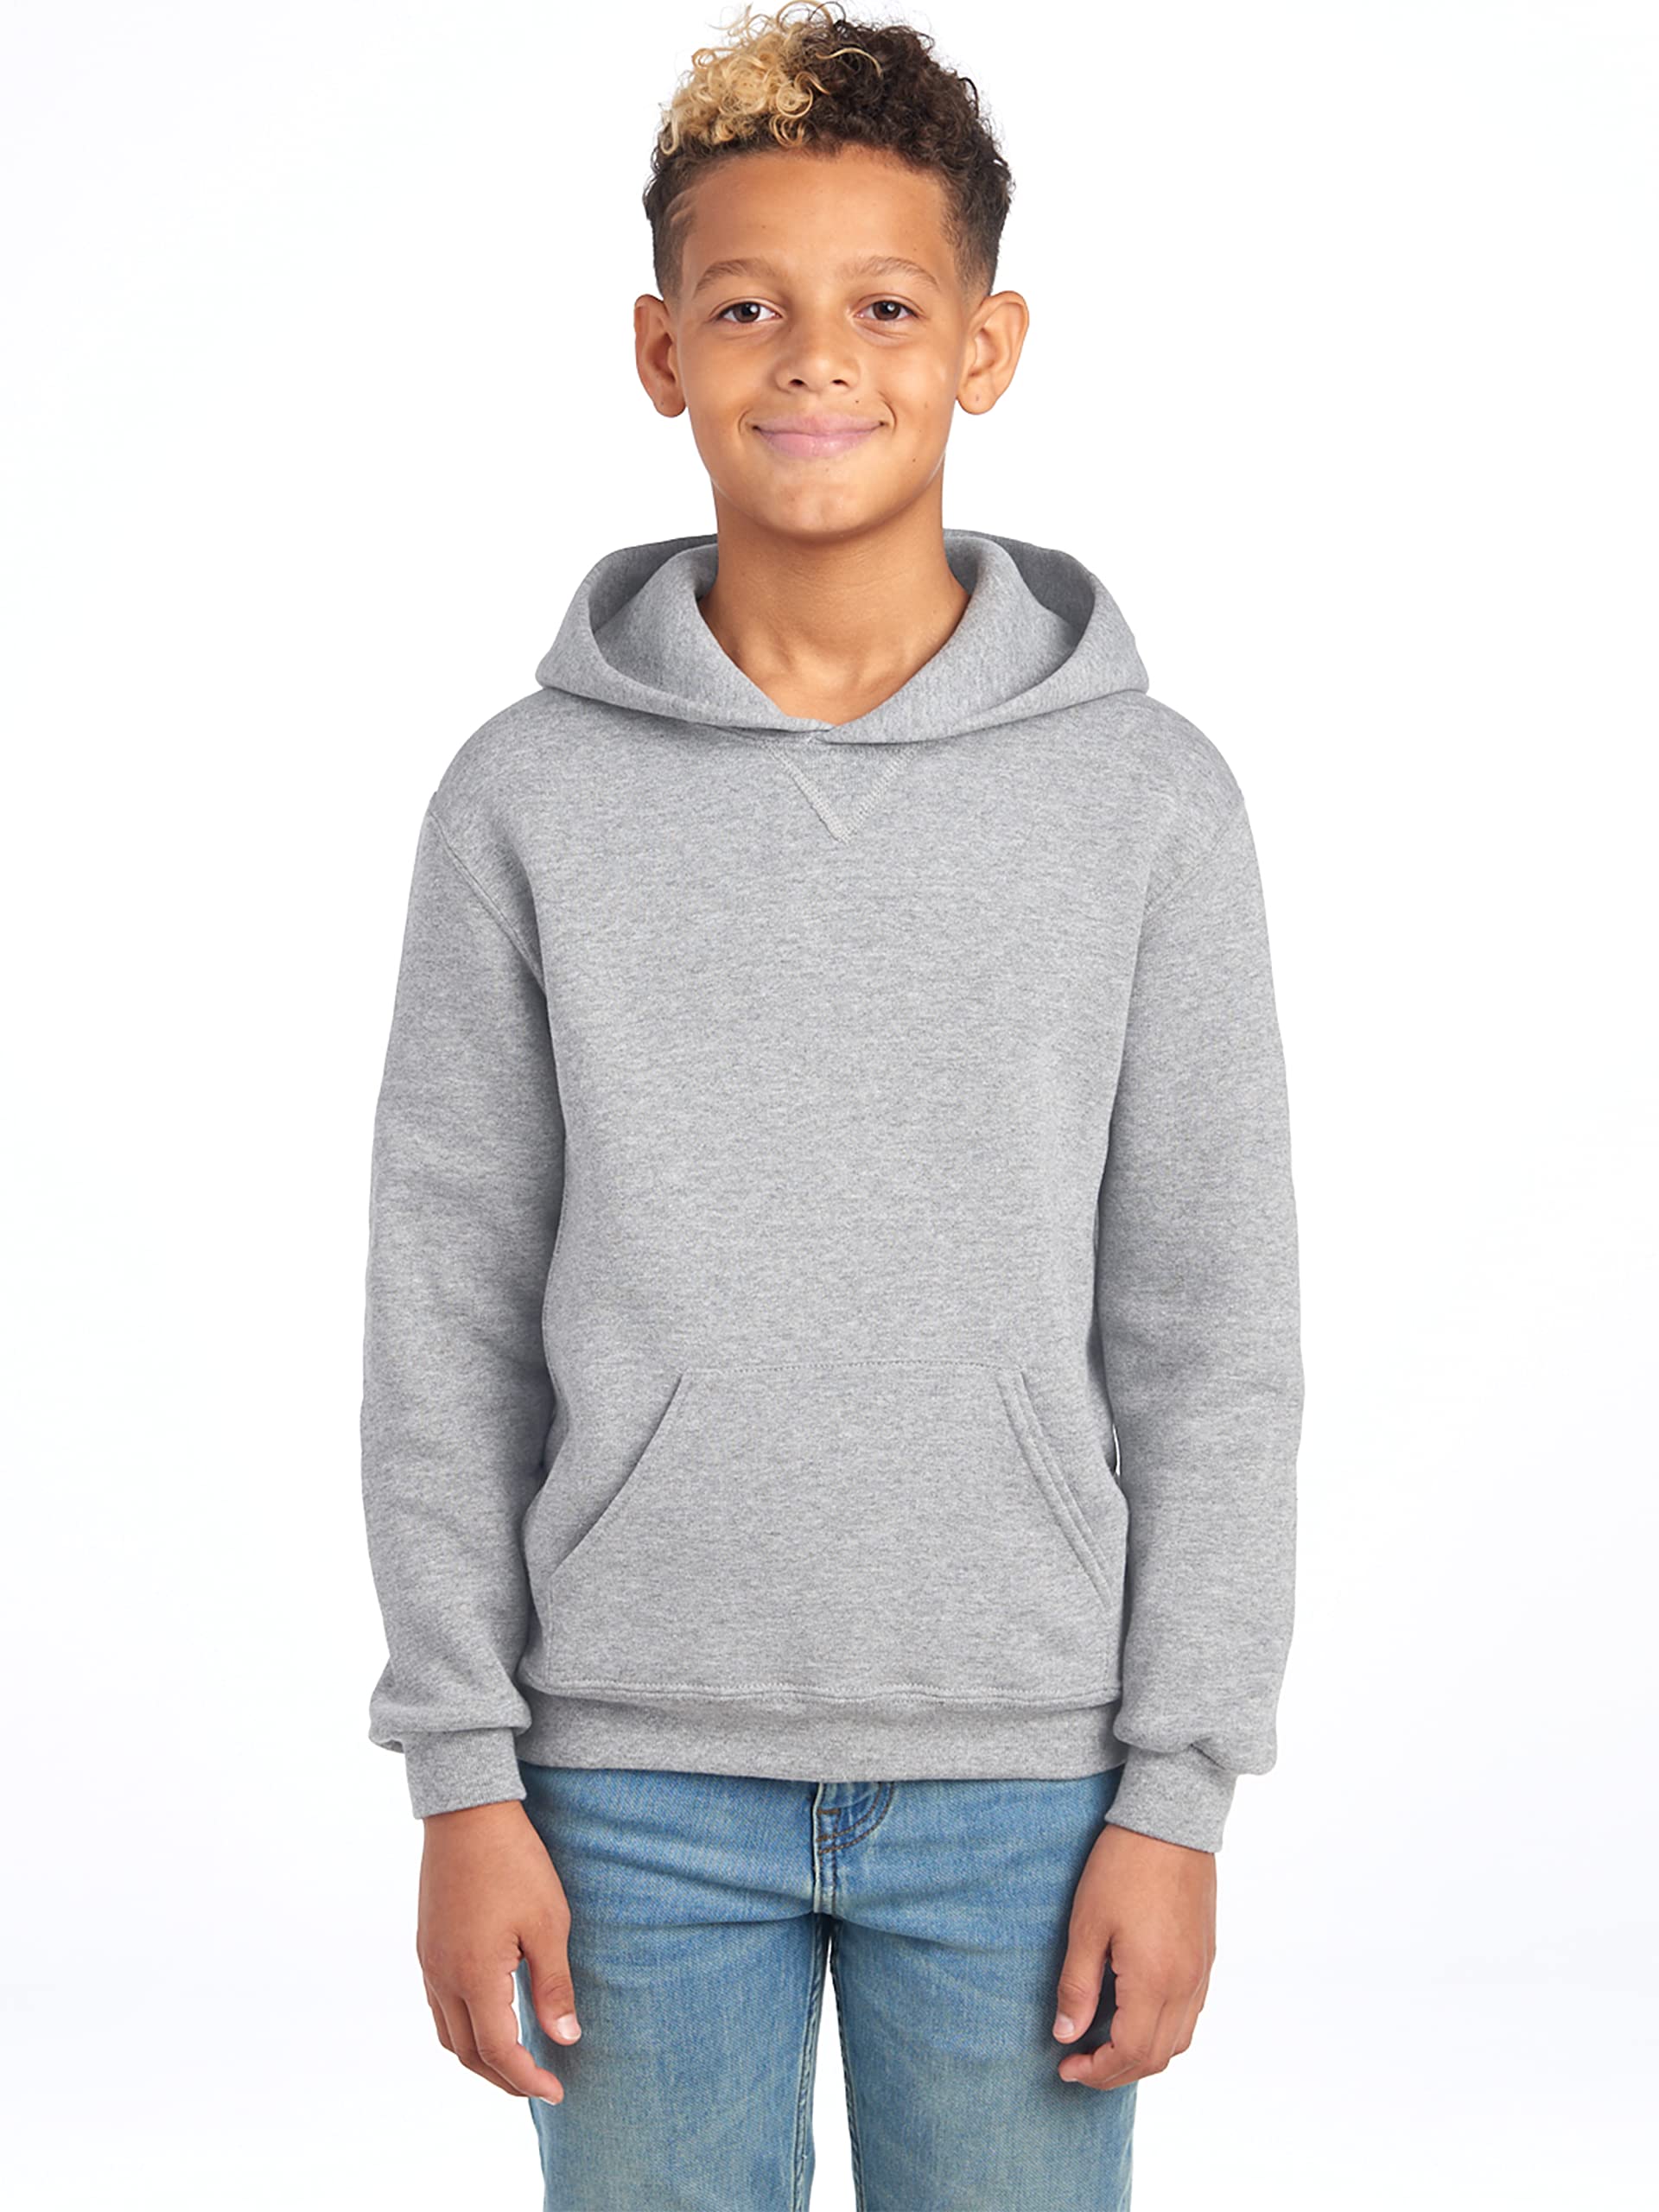 Russell Youth Dri-Power Fleece Hoodies & Sweatshirts, Moisture Wicking, Sizes S-XL